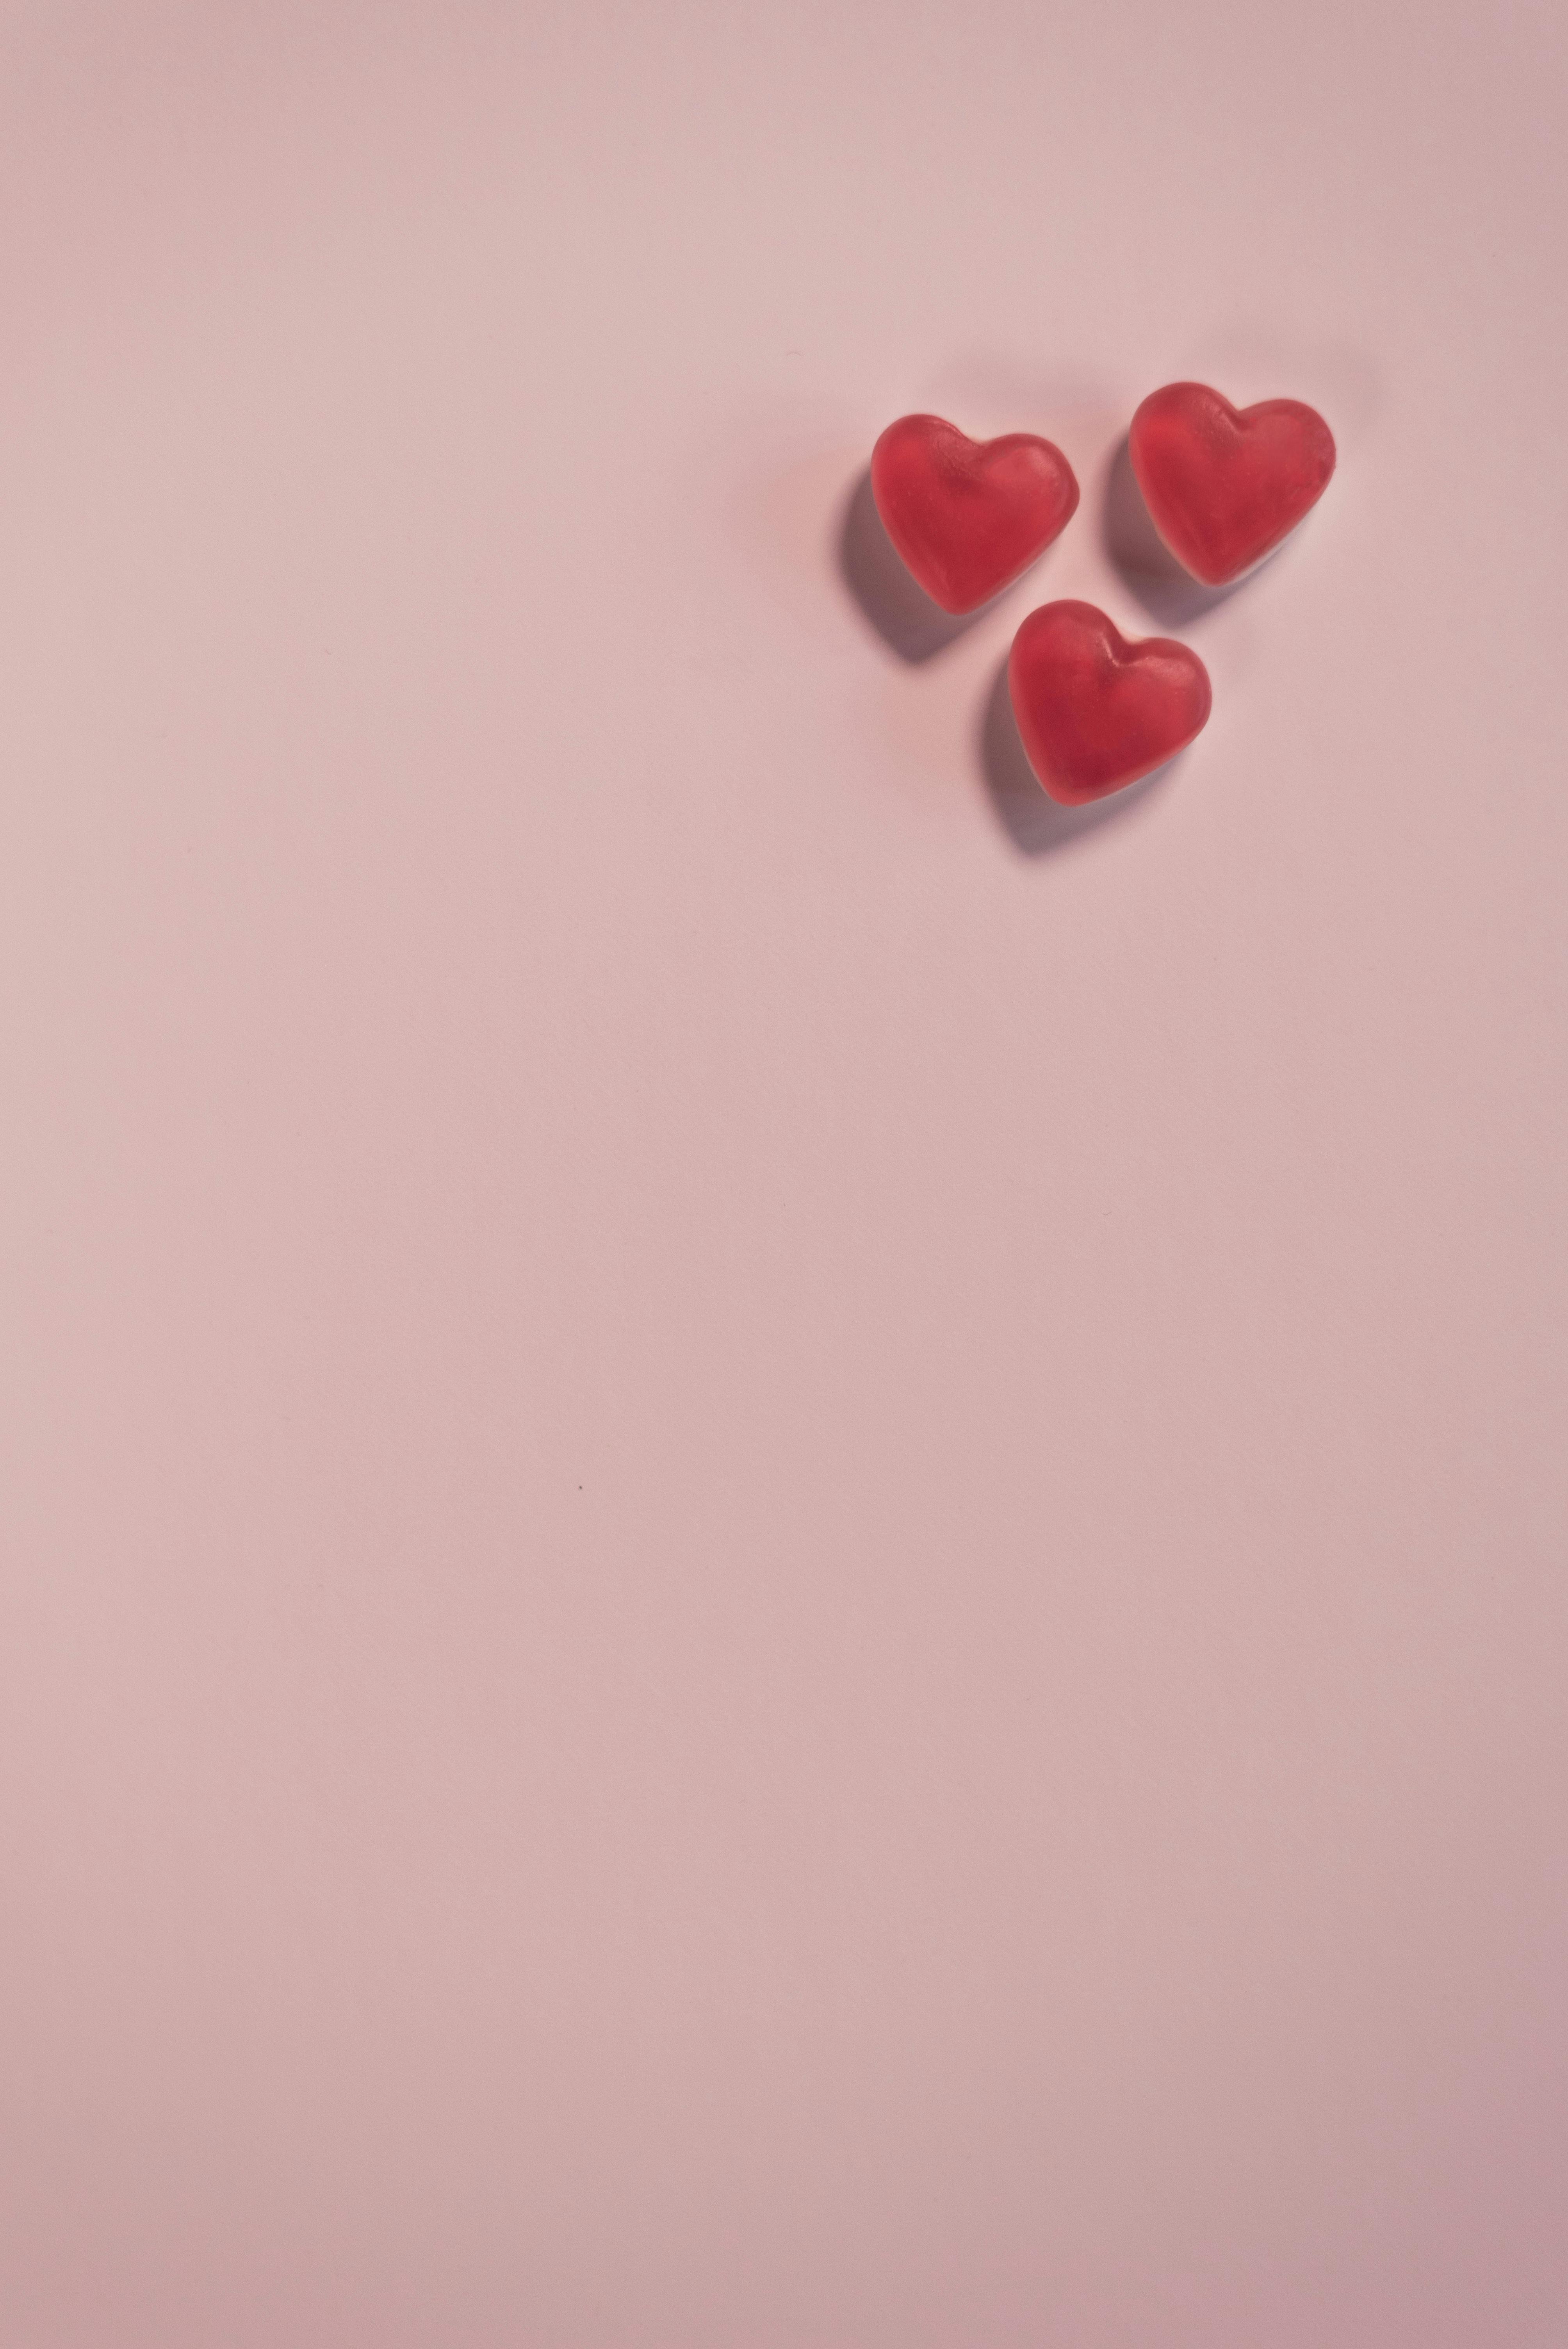 Cute Love Heart wallpaper HD Free Pink Heart Wallpapers